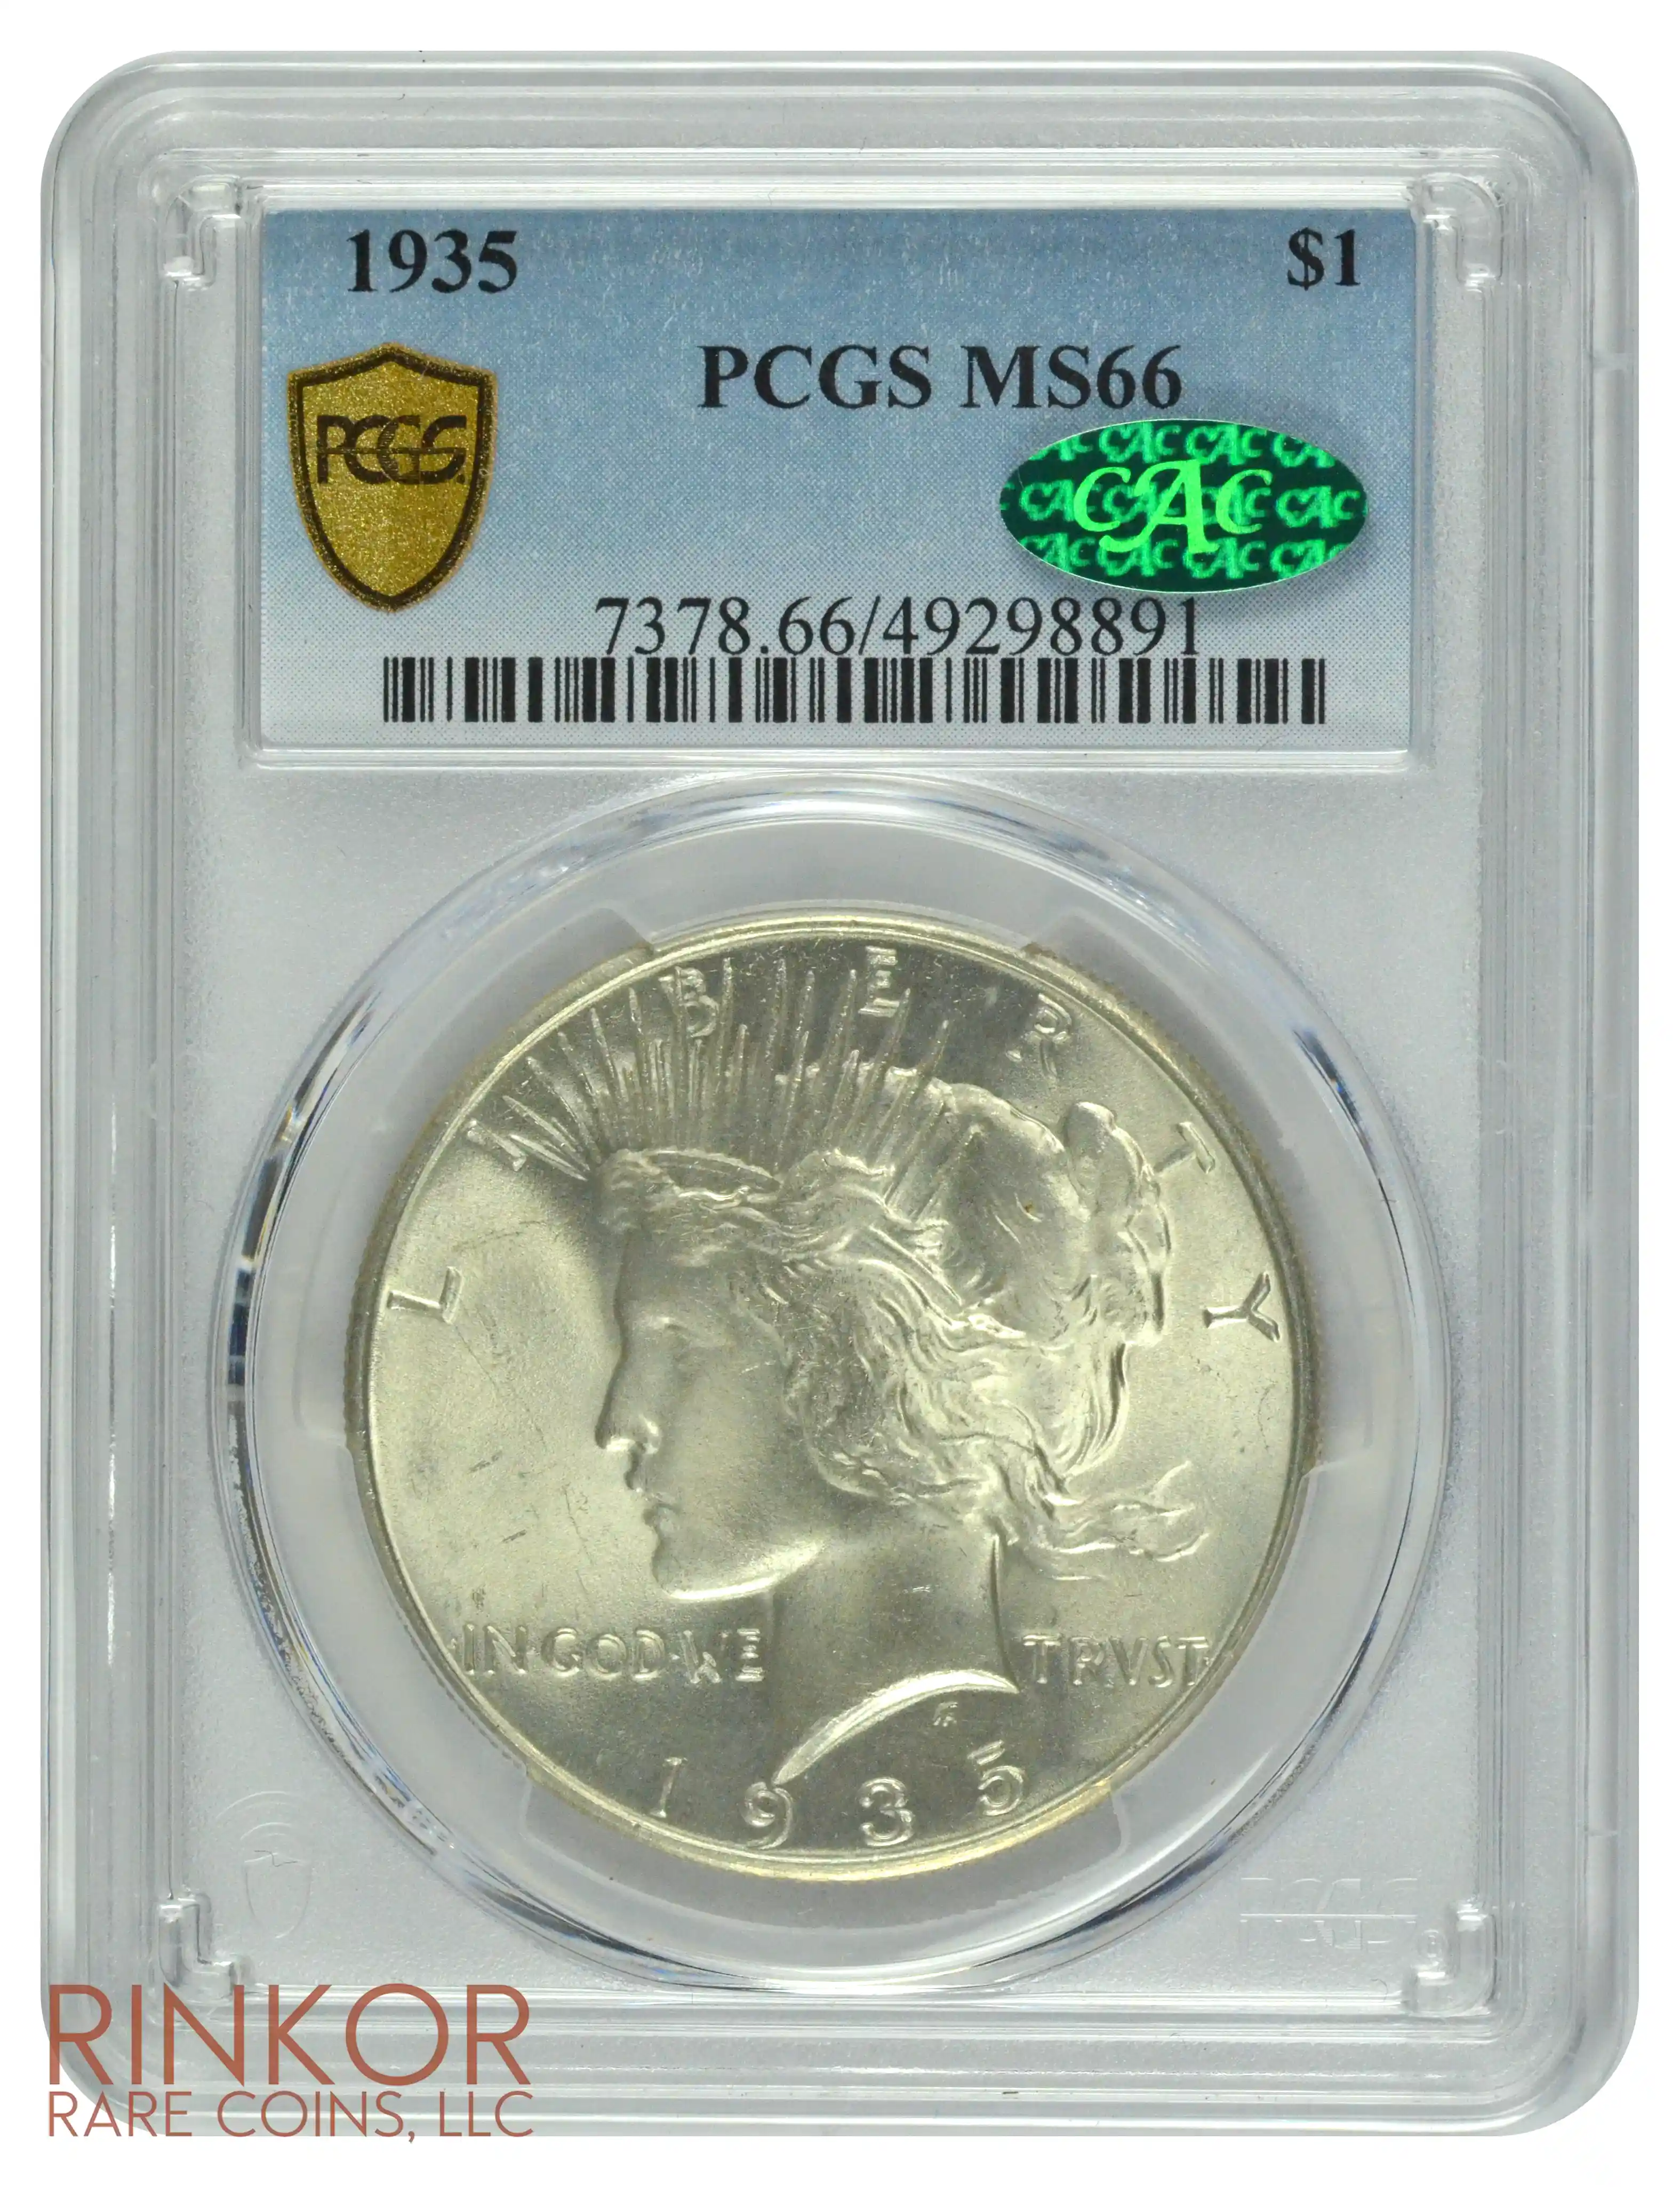 1935 $1 PCGS MS 66 CAC